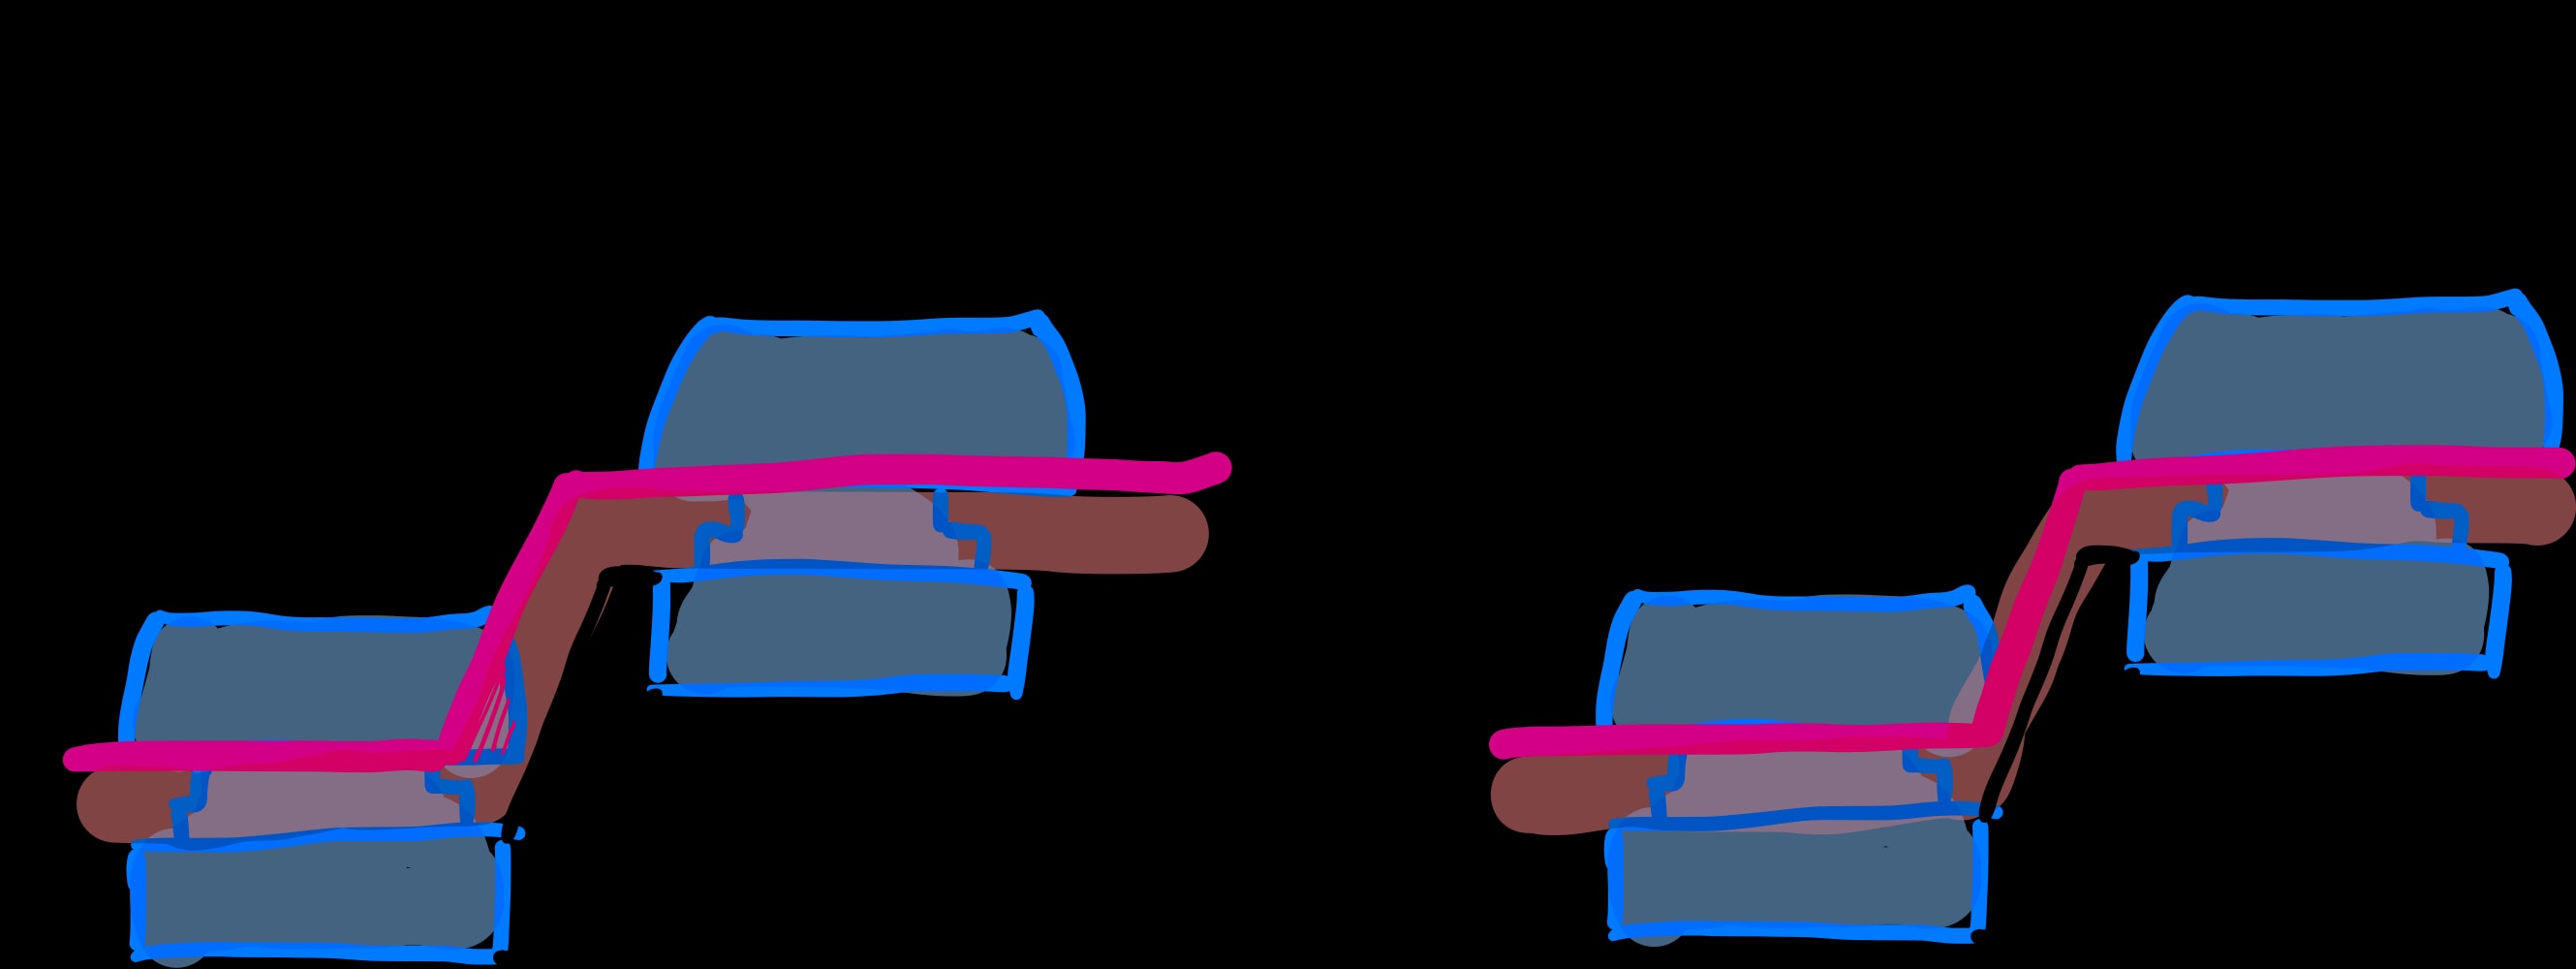 Illustration of Offset Surface